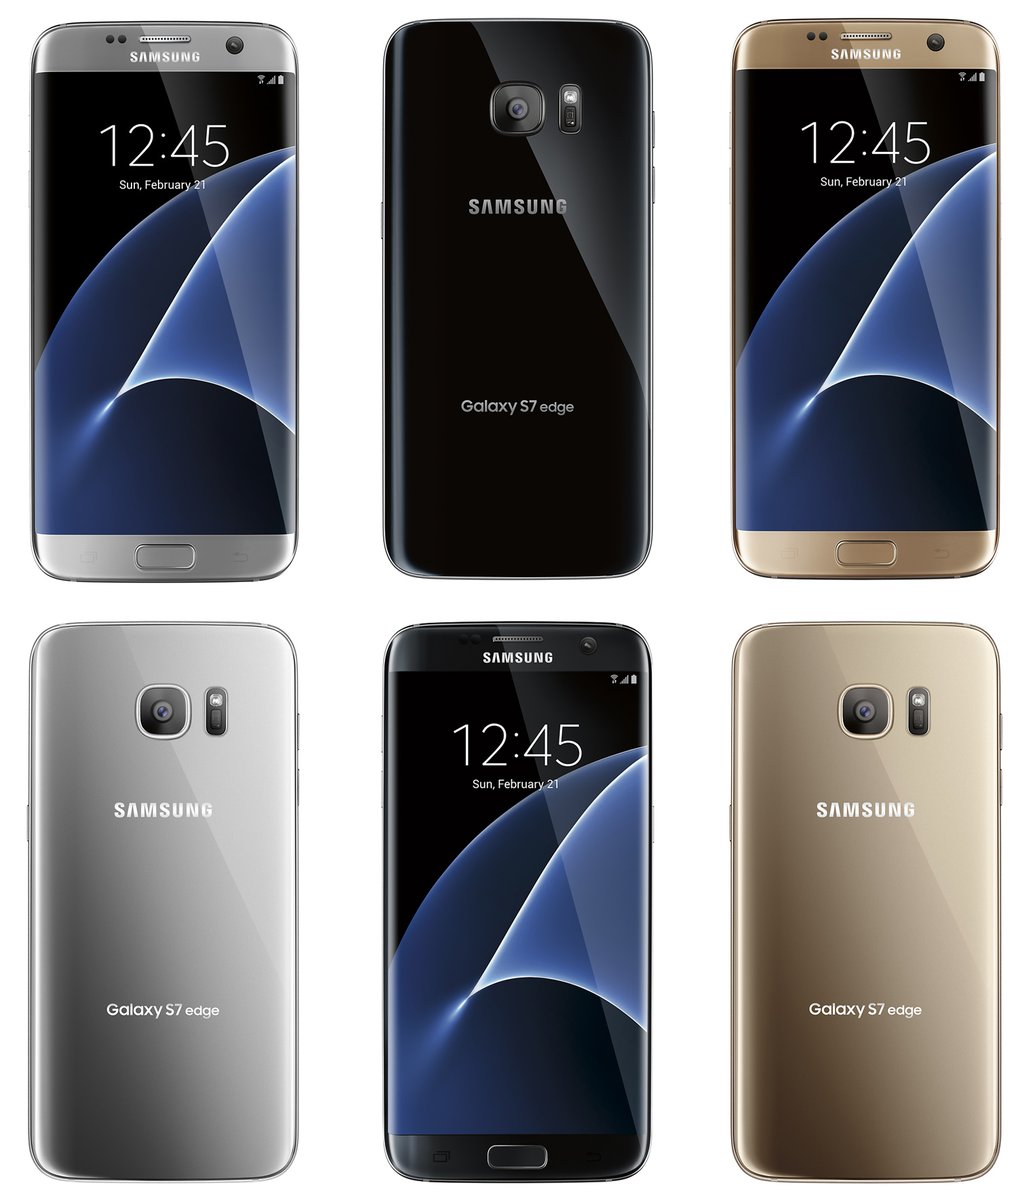 Galaxy S7 edge render